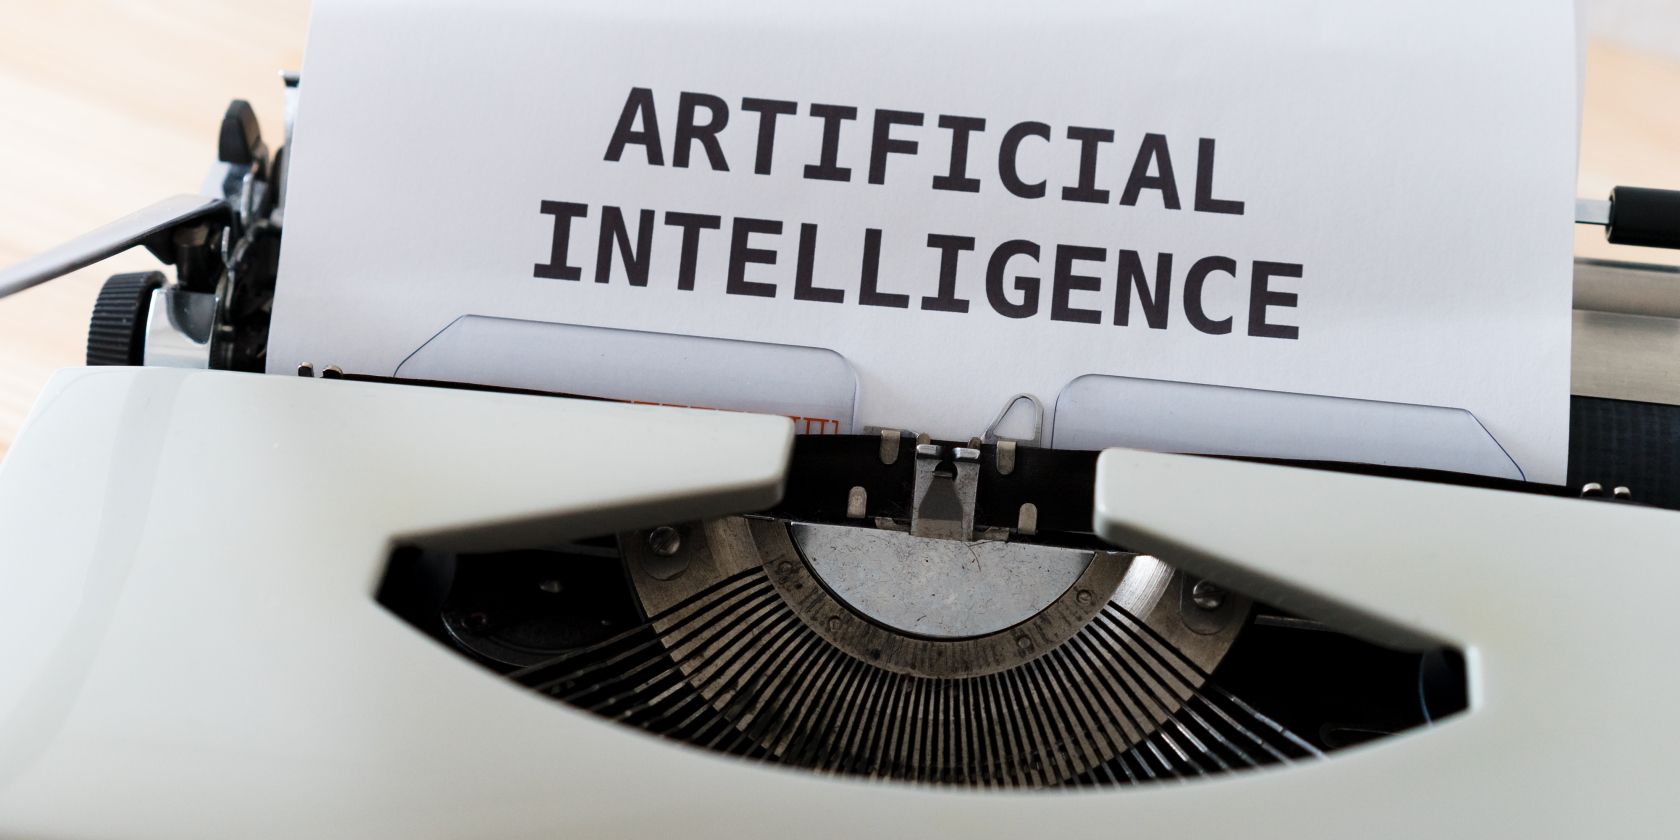 Artificial Intelligence Written on Typewriter